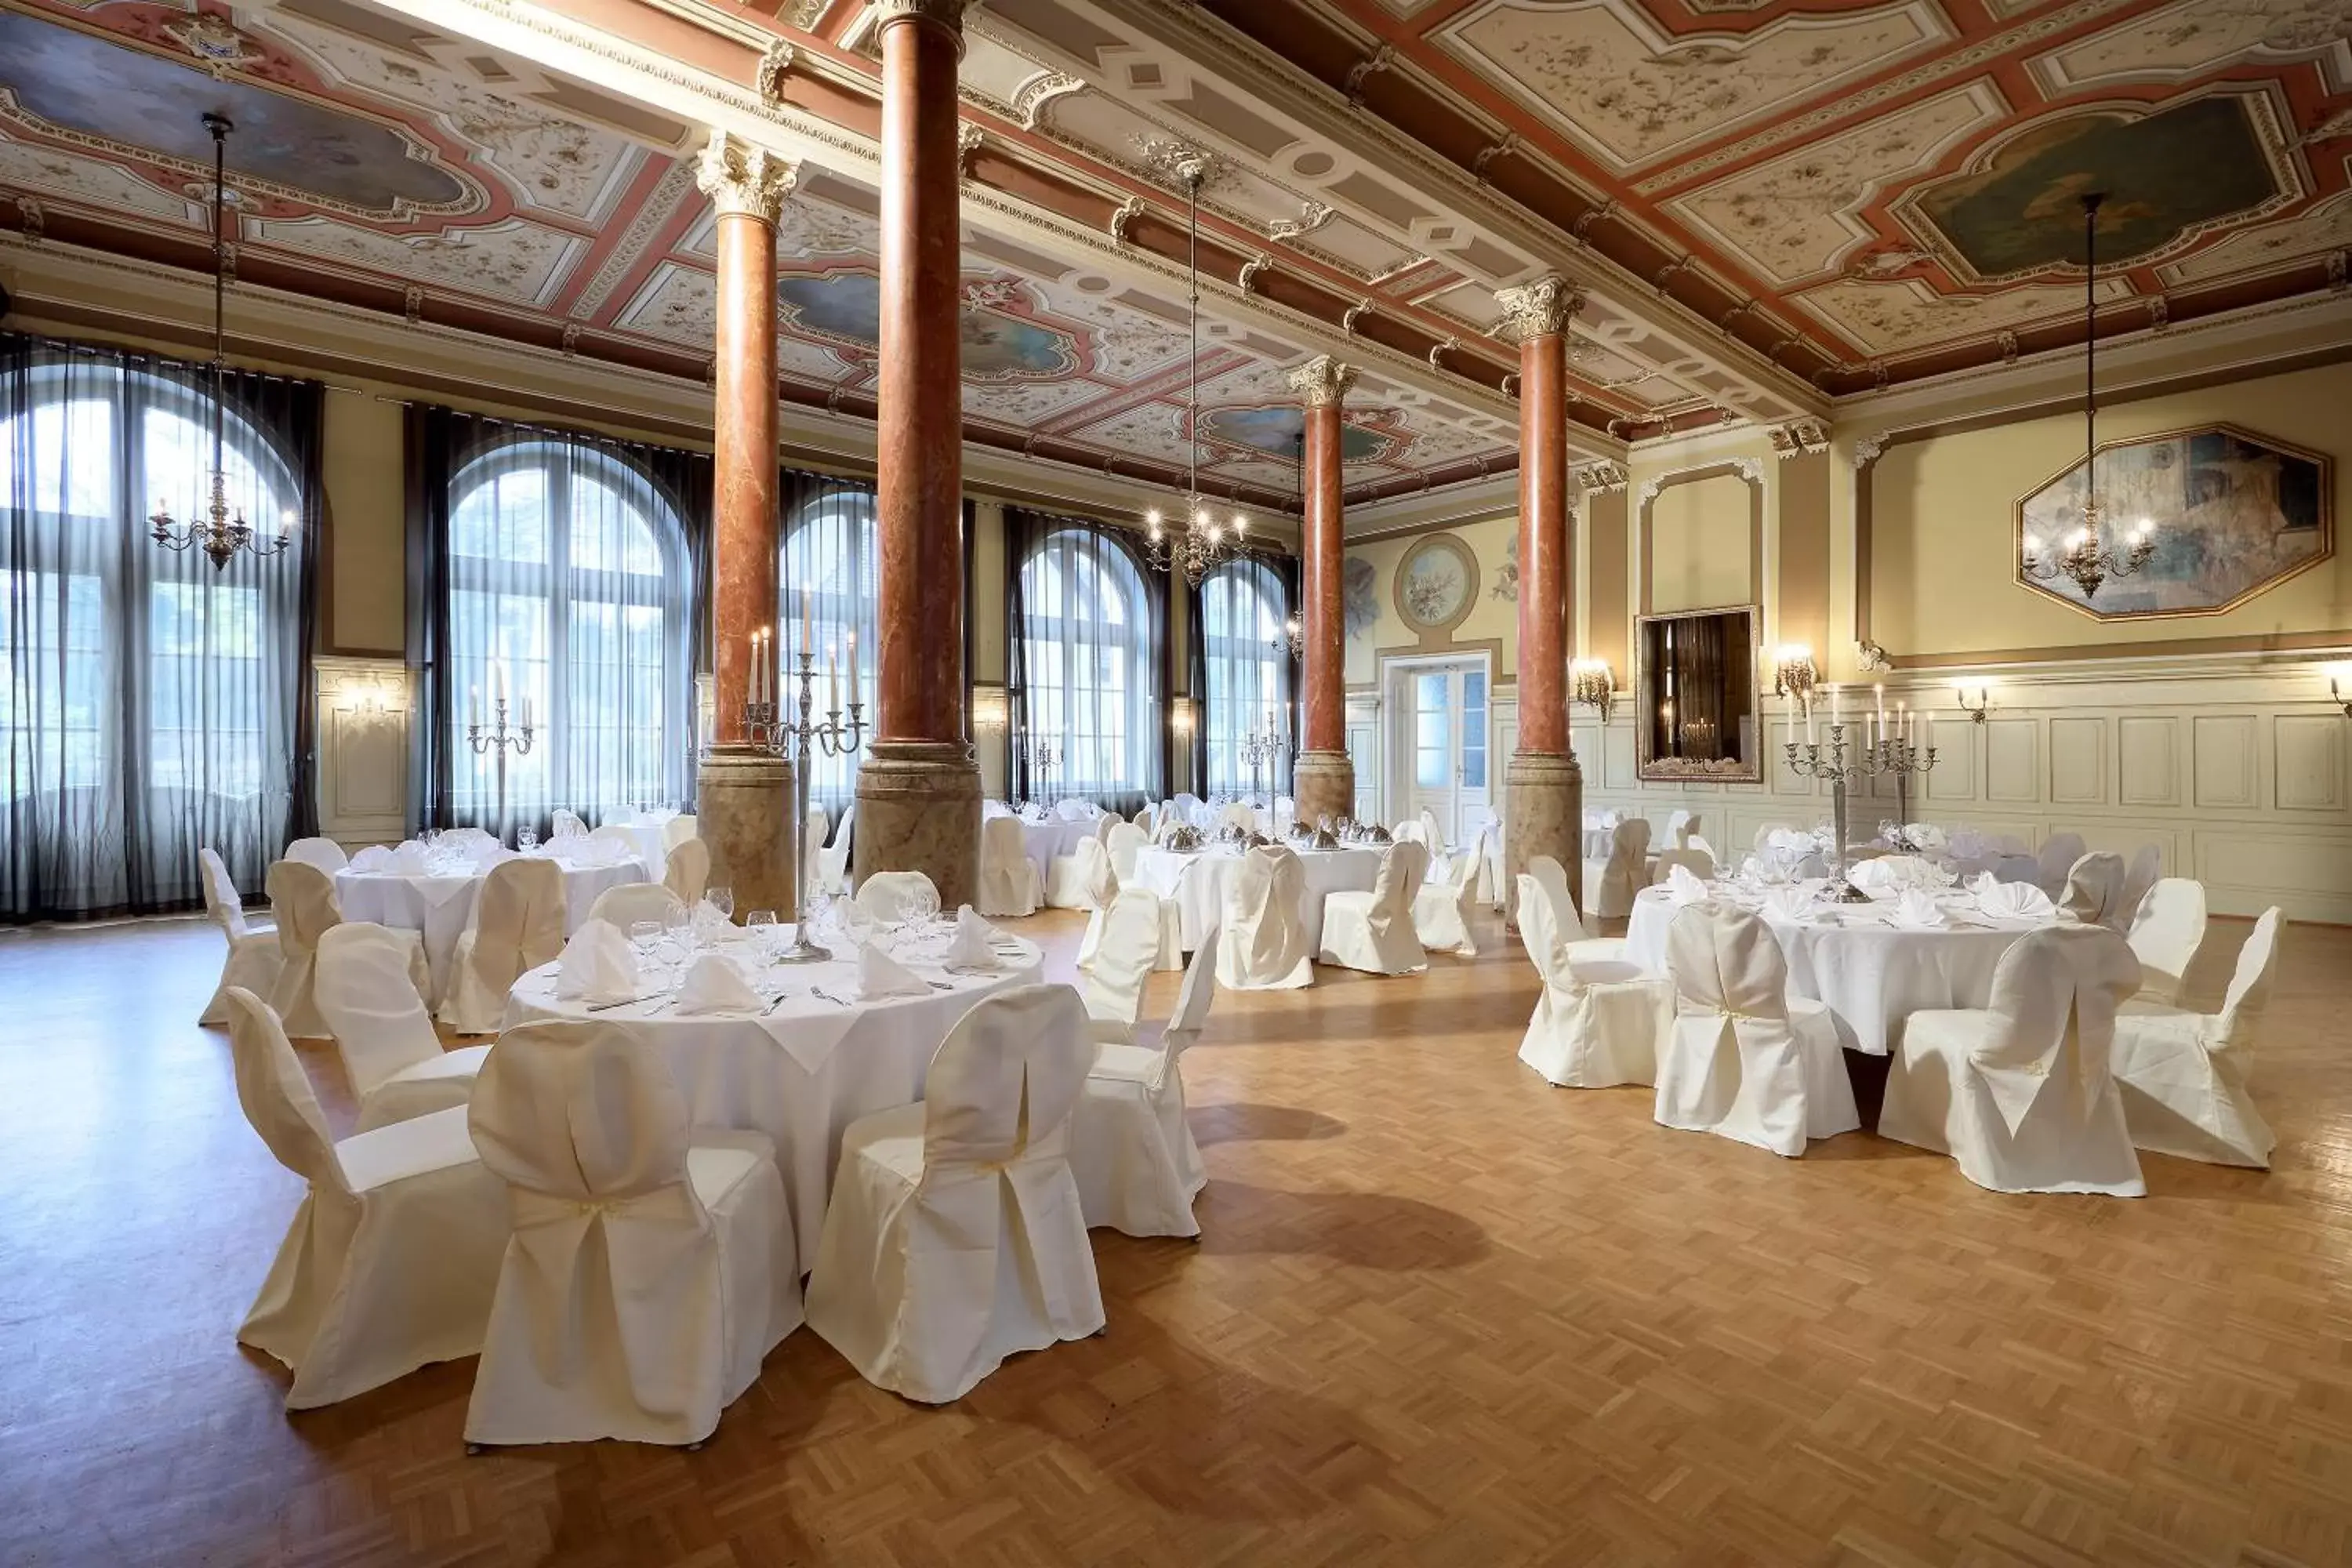 Banquet/Function facilities, Banquet Facilities in Eurostars Park Hotel Maximilian